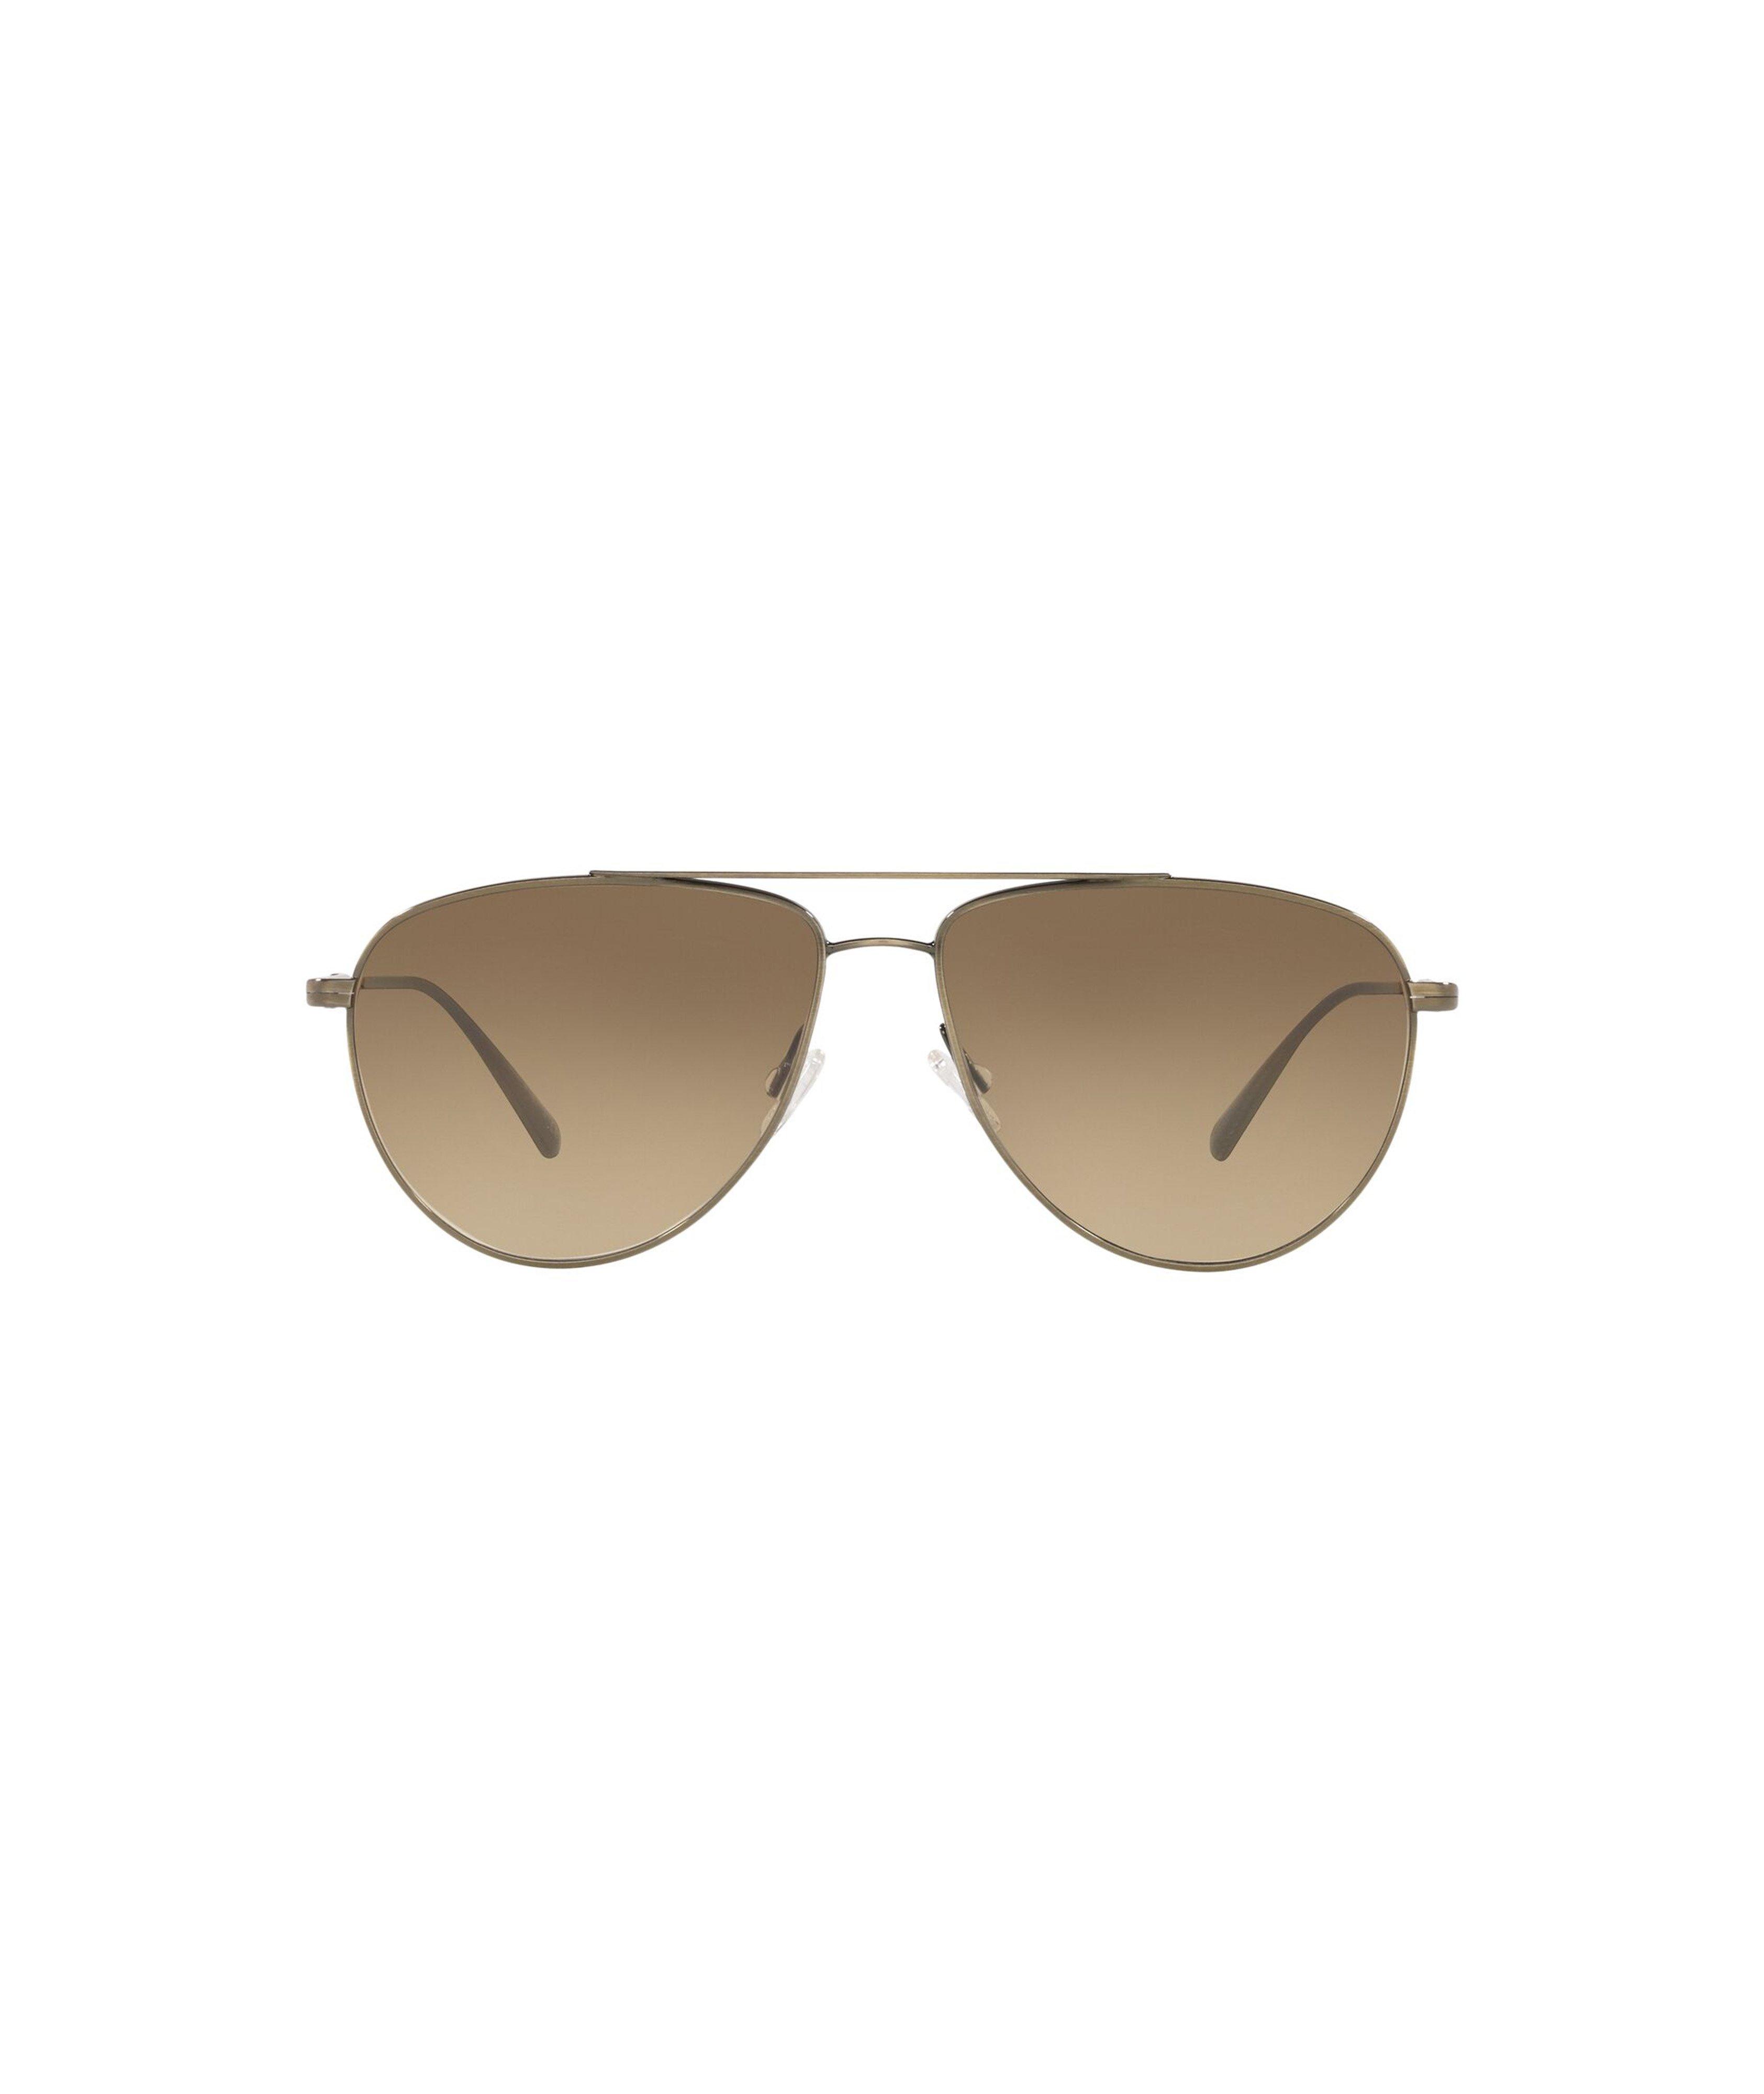 Disoriano Sunglasses image 0